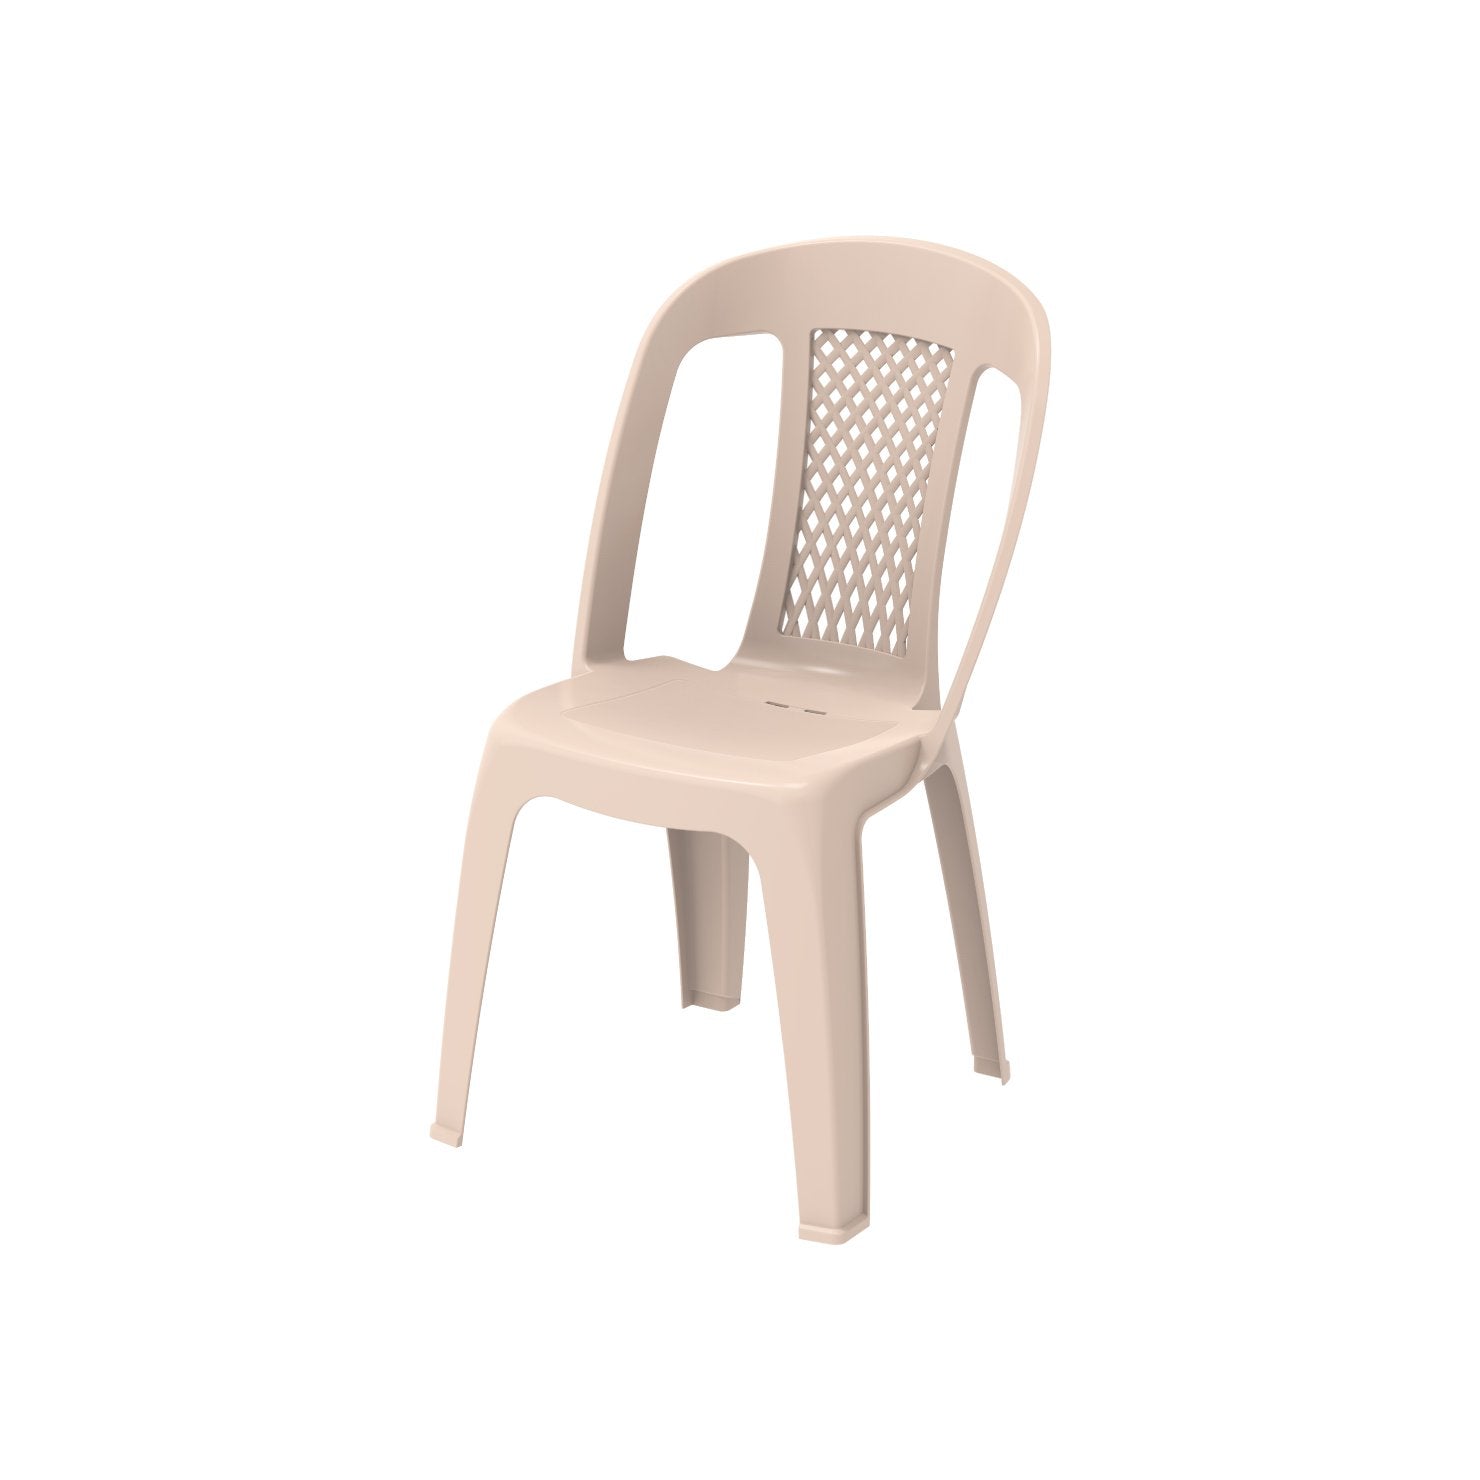 Regal Outdoor Garden Chair - Cosmoplast Bahrain